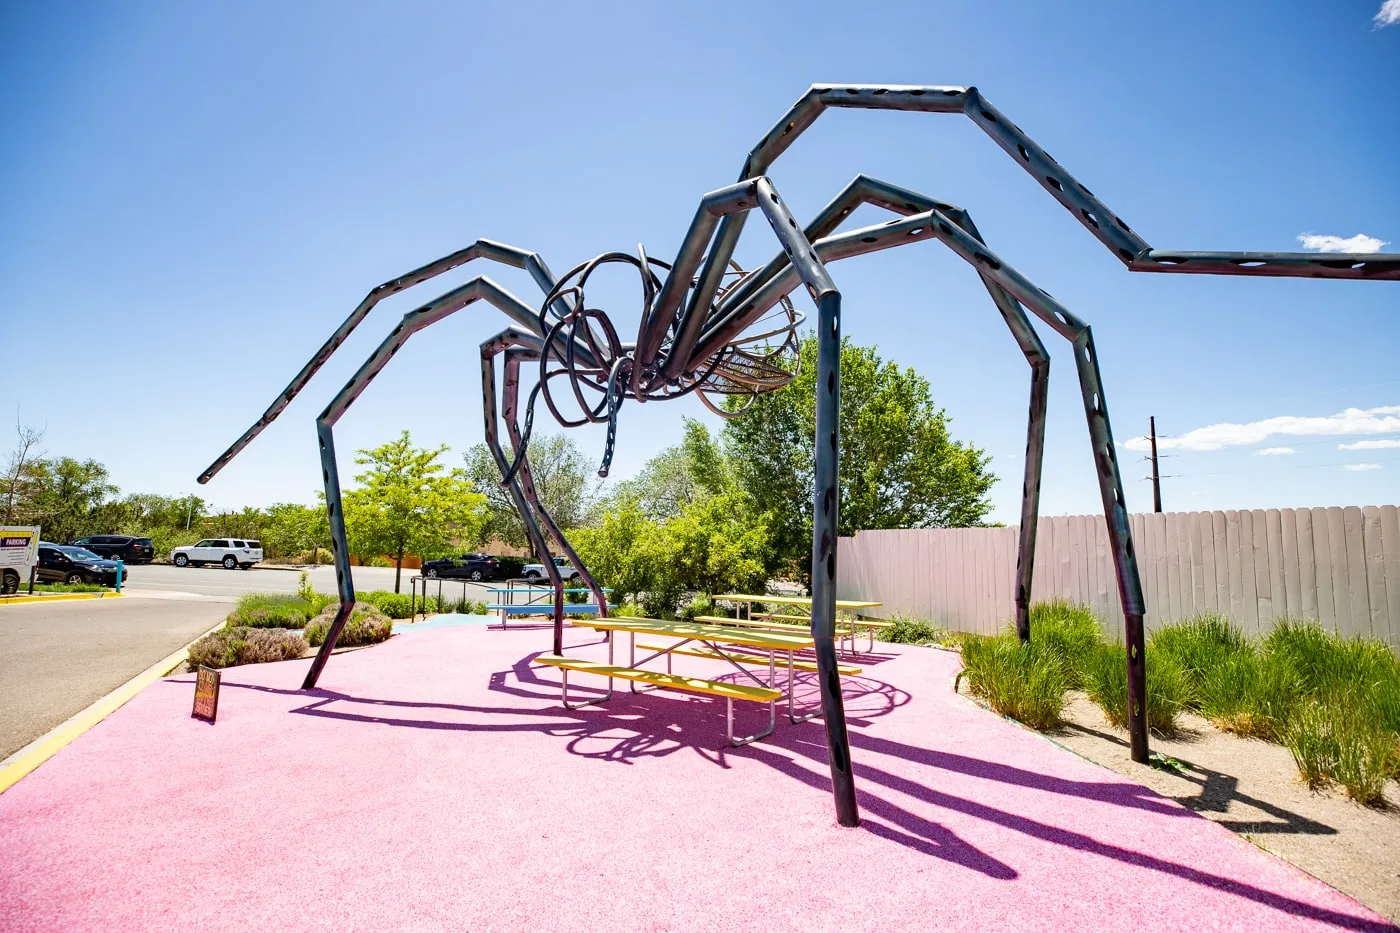 TaranTula - Giant Spider at Meow Wolf in Santa Fe, New Mexico